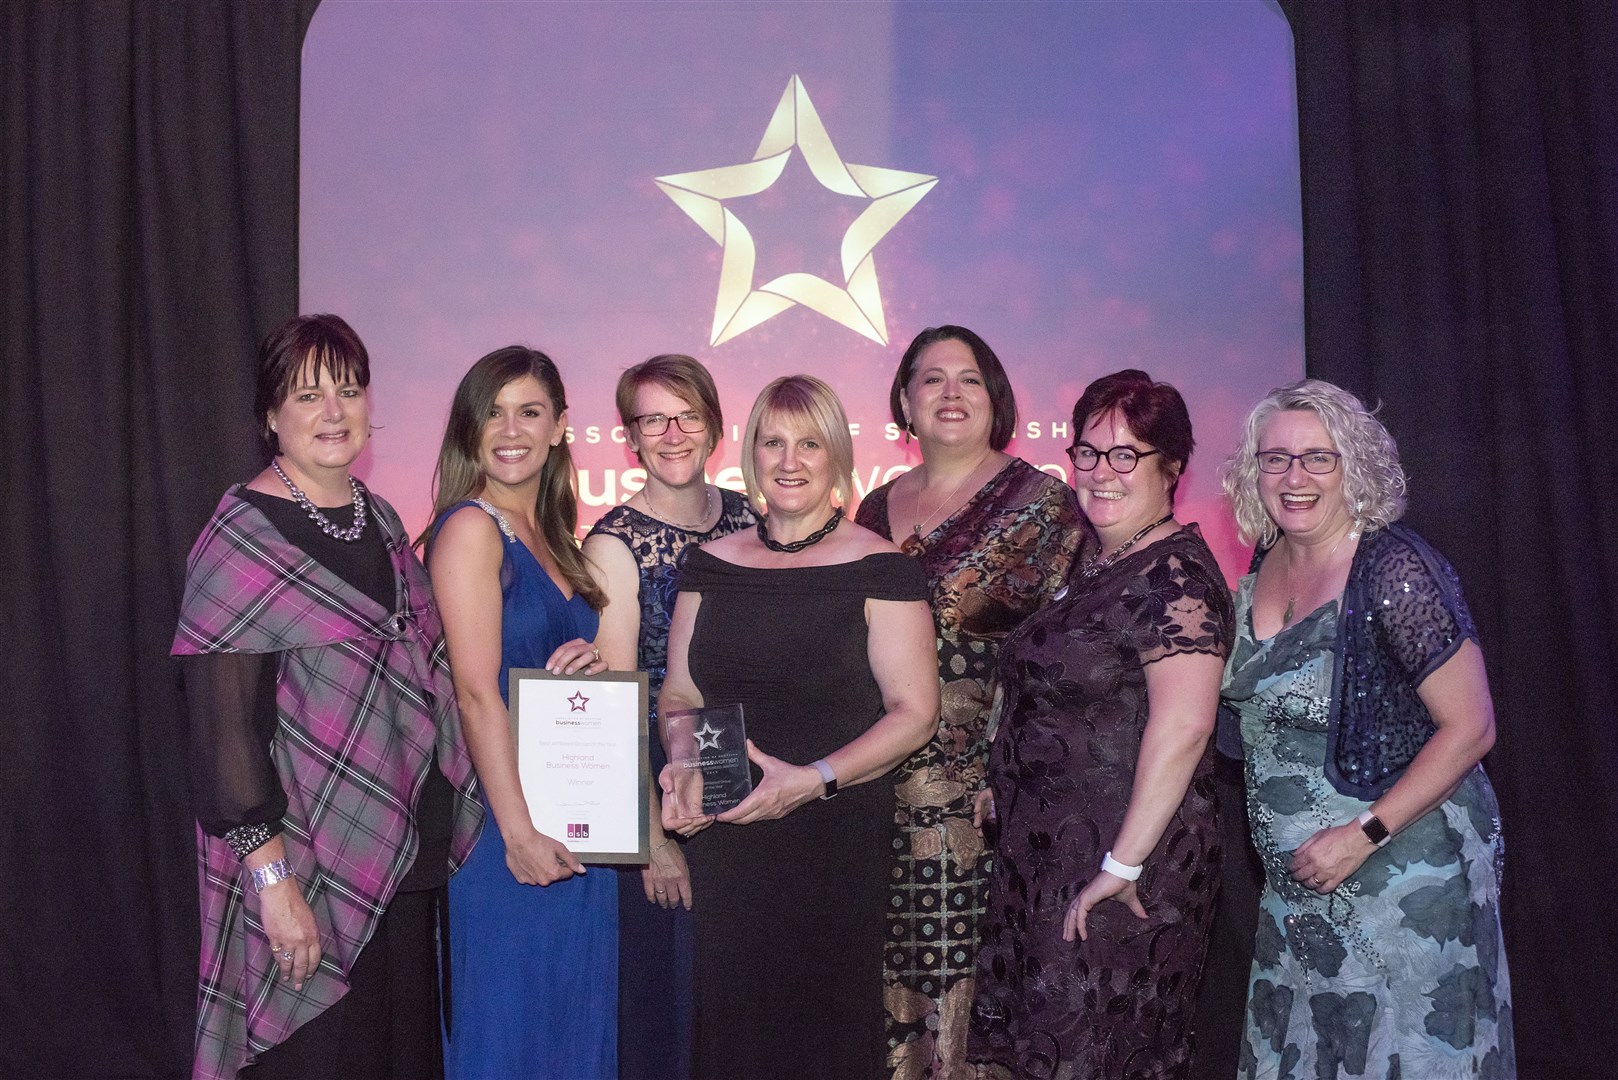 Award winners at this year's Association of Scottish Business Women (ASB) Awards in Edinburgh.